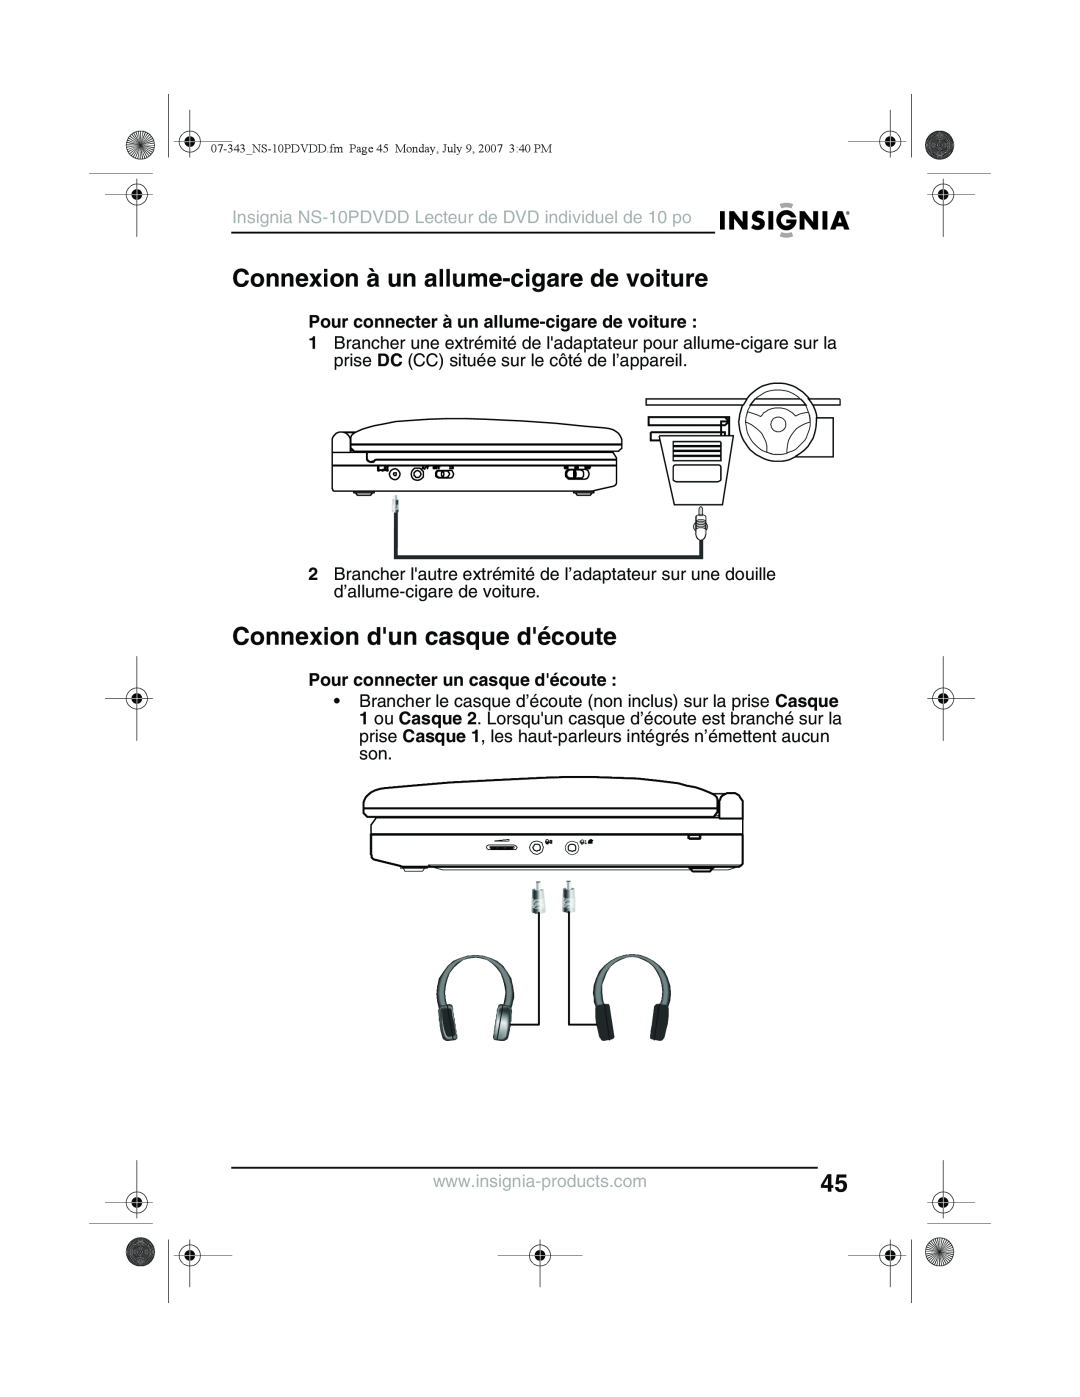 Insignia NS-10PDVDD manual Connexion à un allume-cigare de voiture, Connexion dun casque découte 